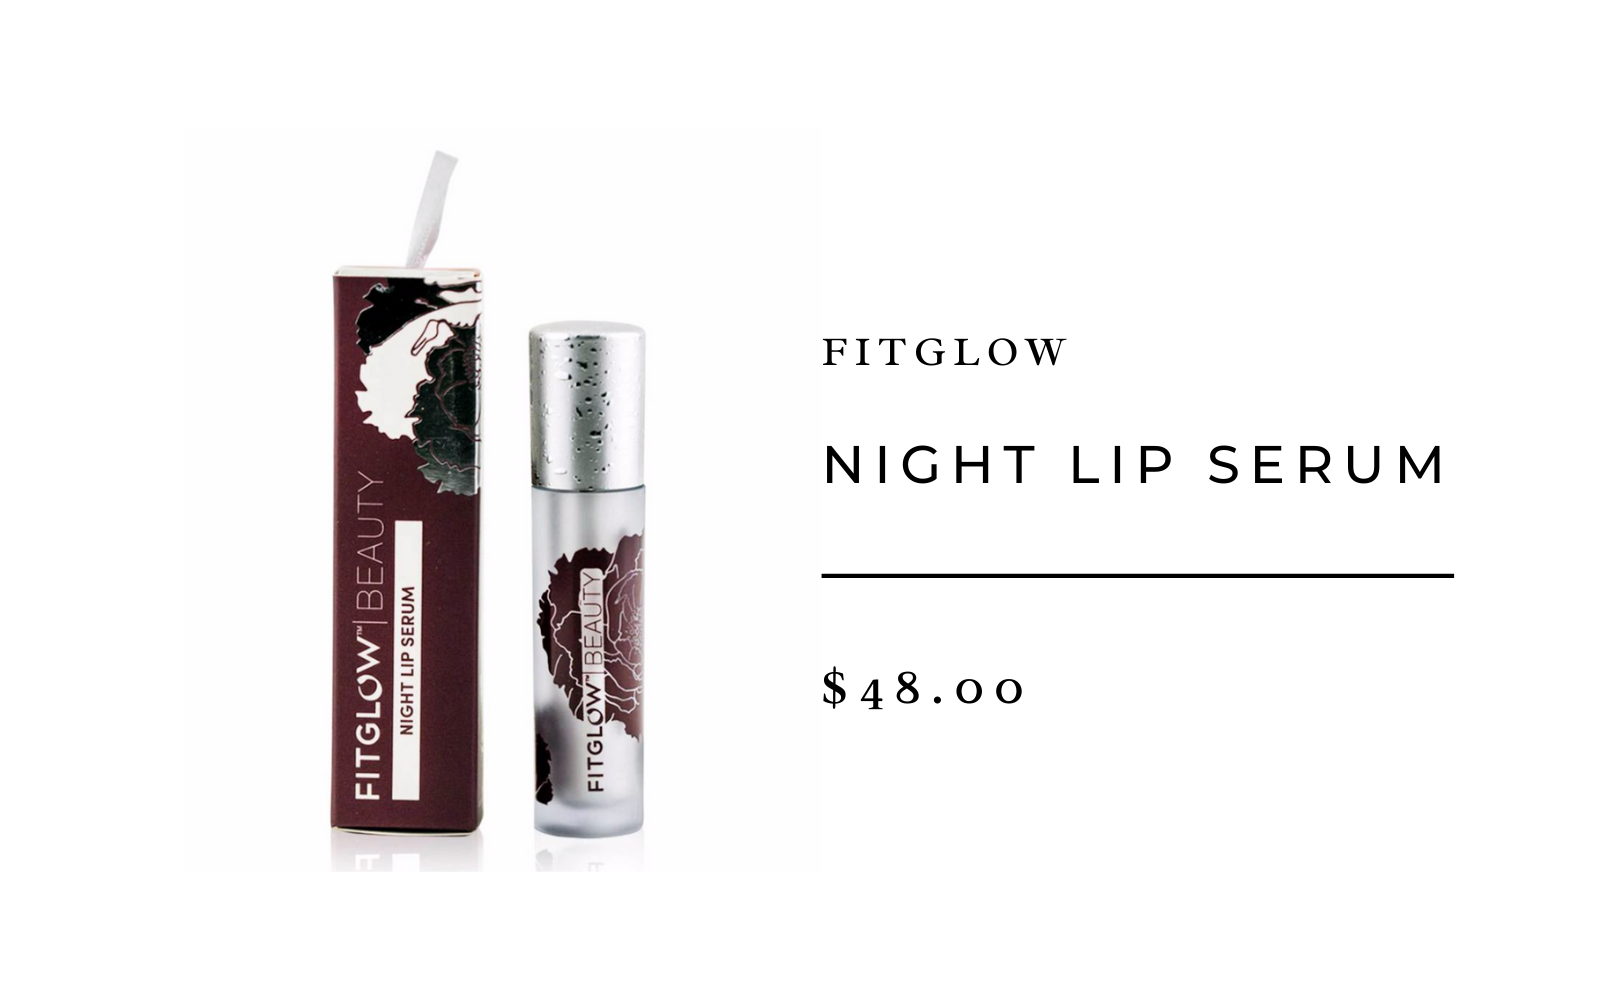 Fitglow Night Lip Serum